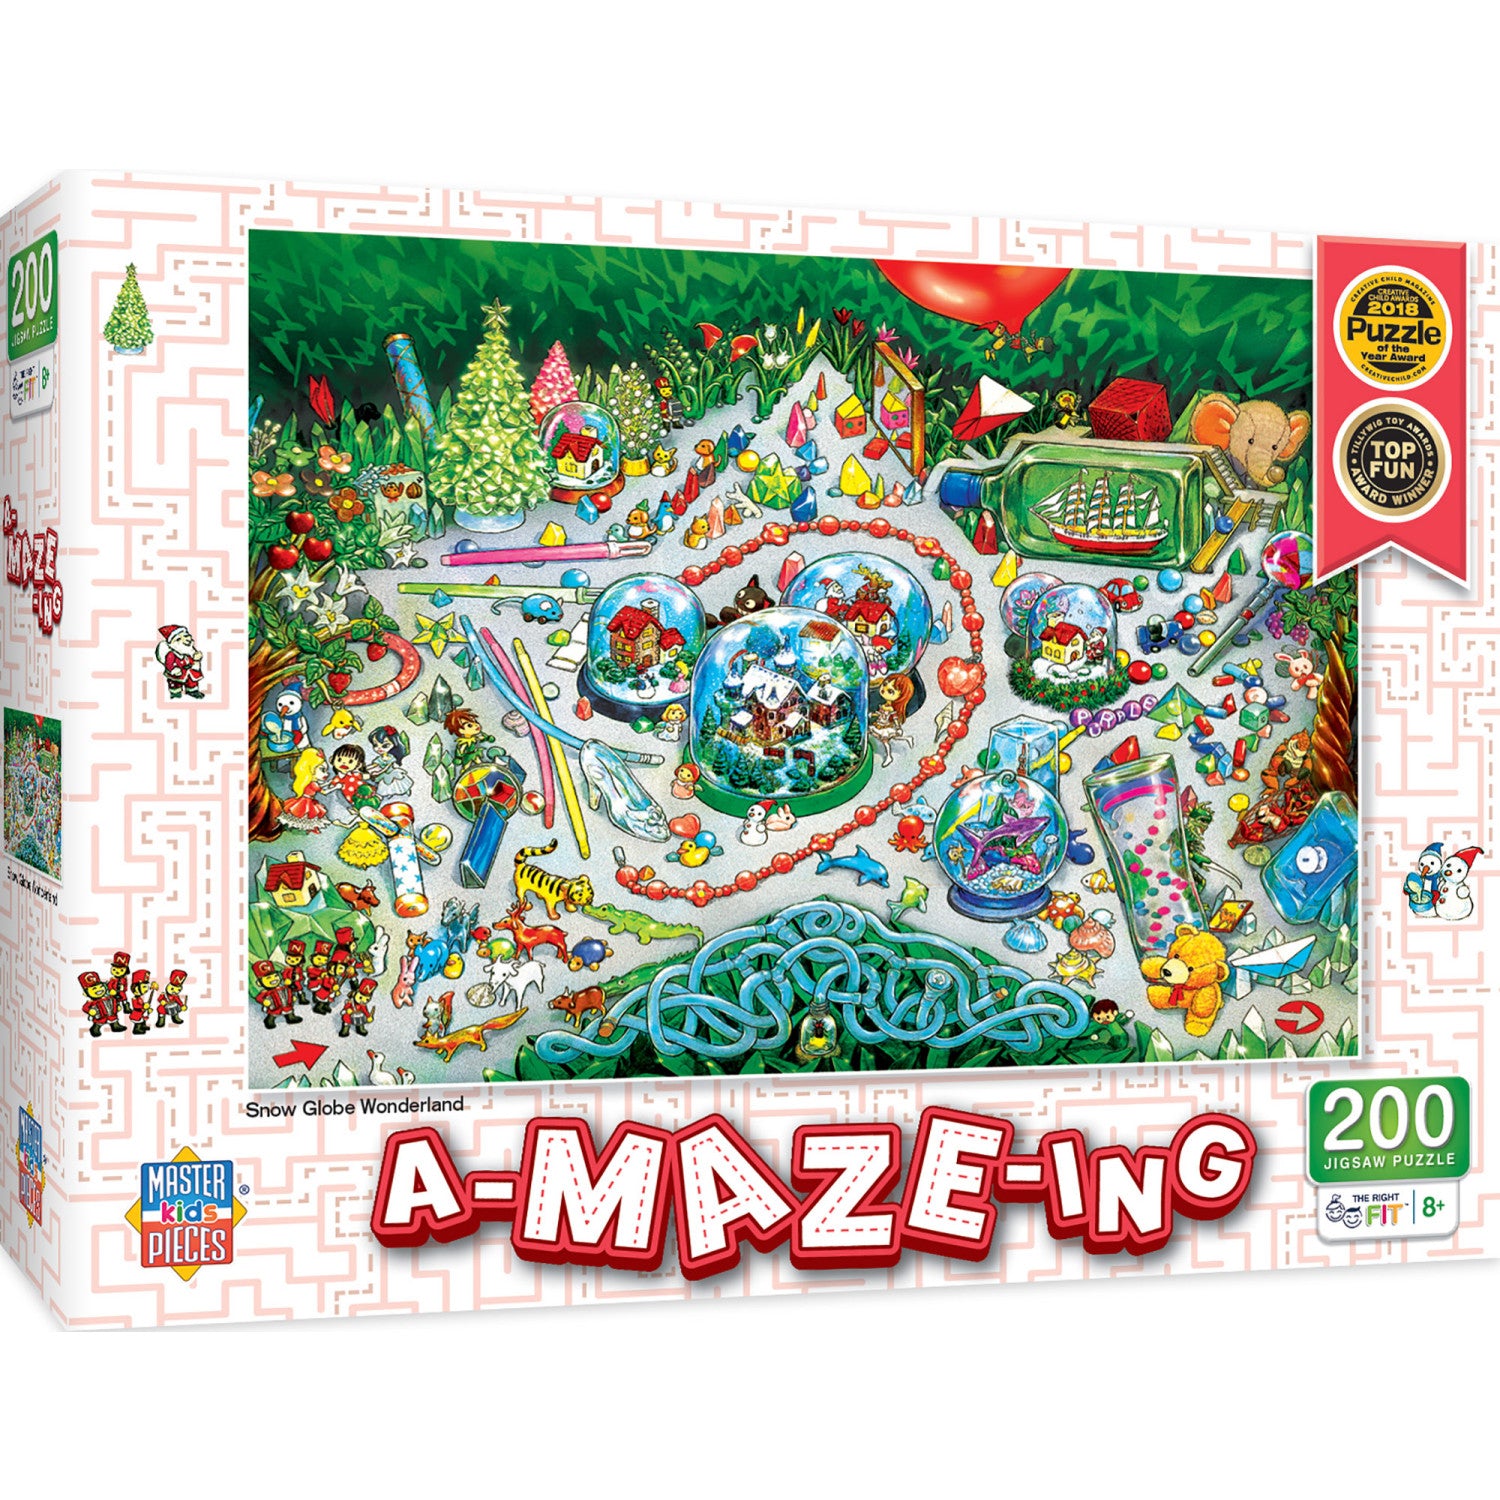 A-Maze-ing - Snow Globe Wonderland 200 Piece Jigsaw Puzzle